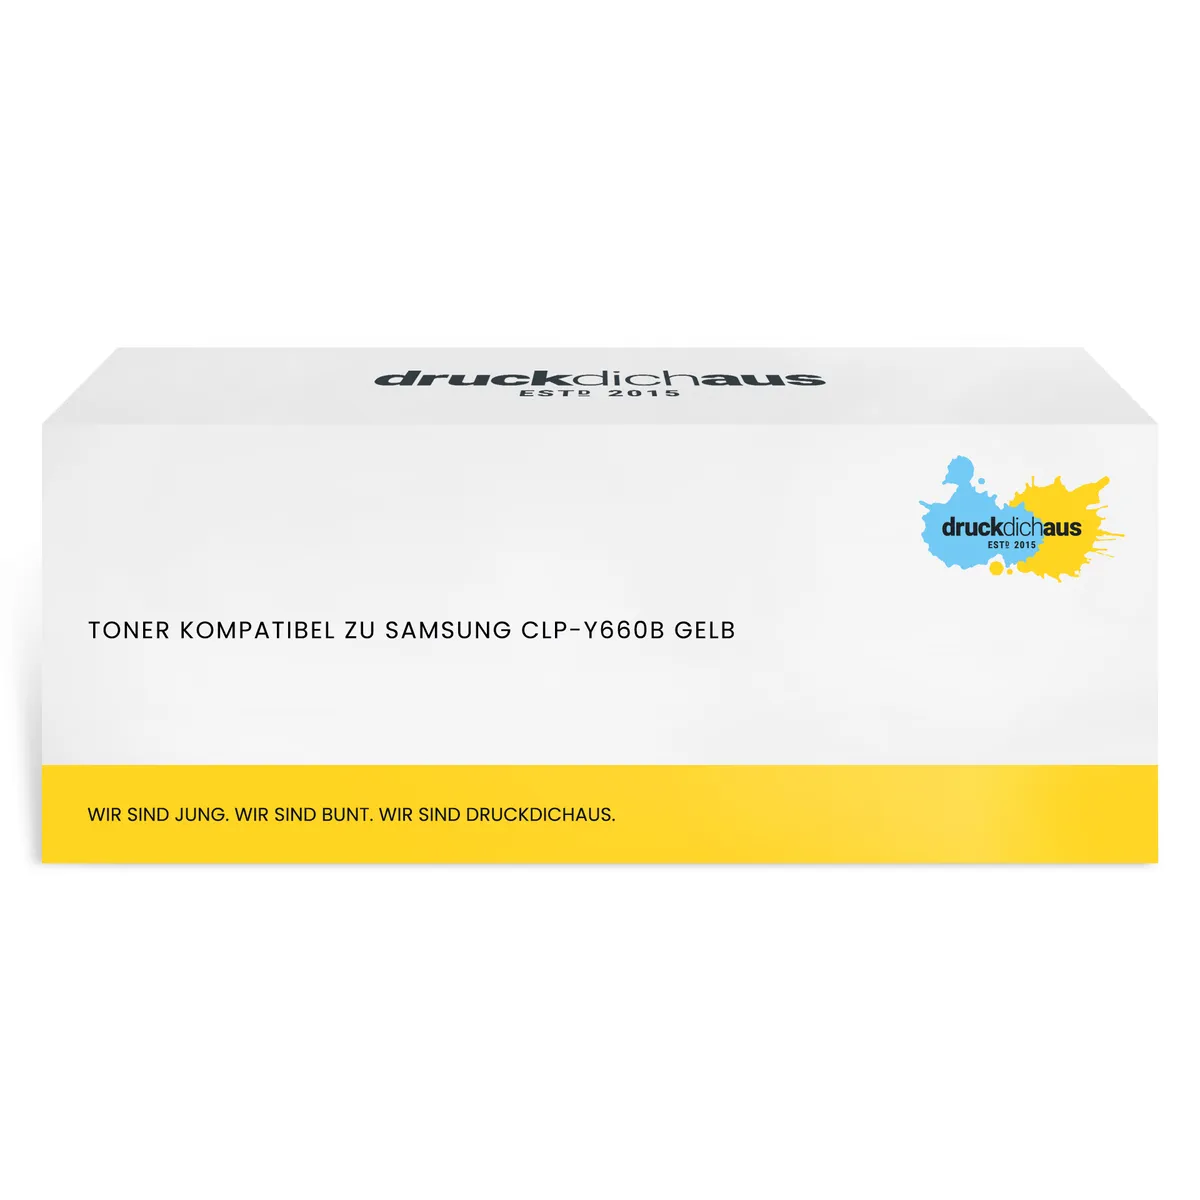 Toner kompatibel zu Samsung CLP-Y660B gelb